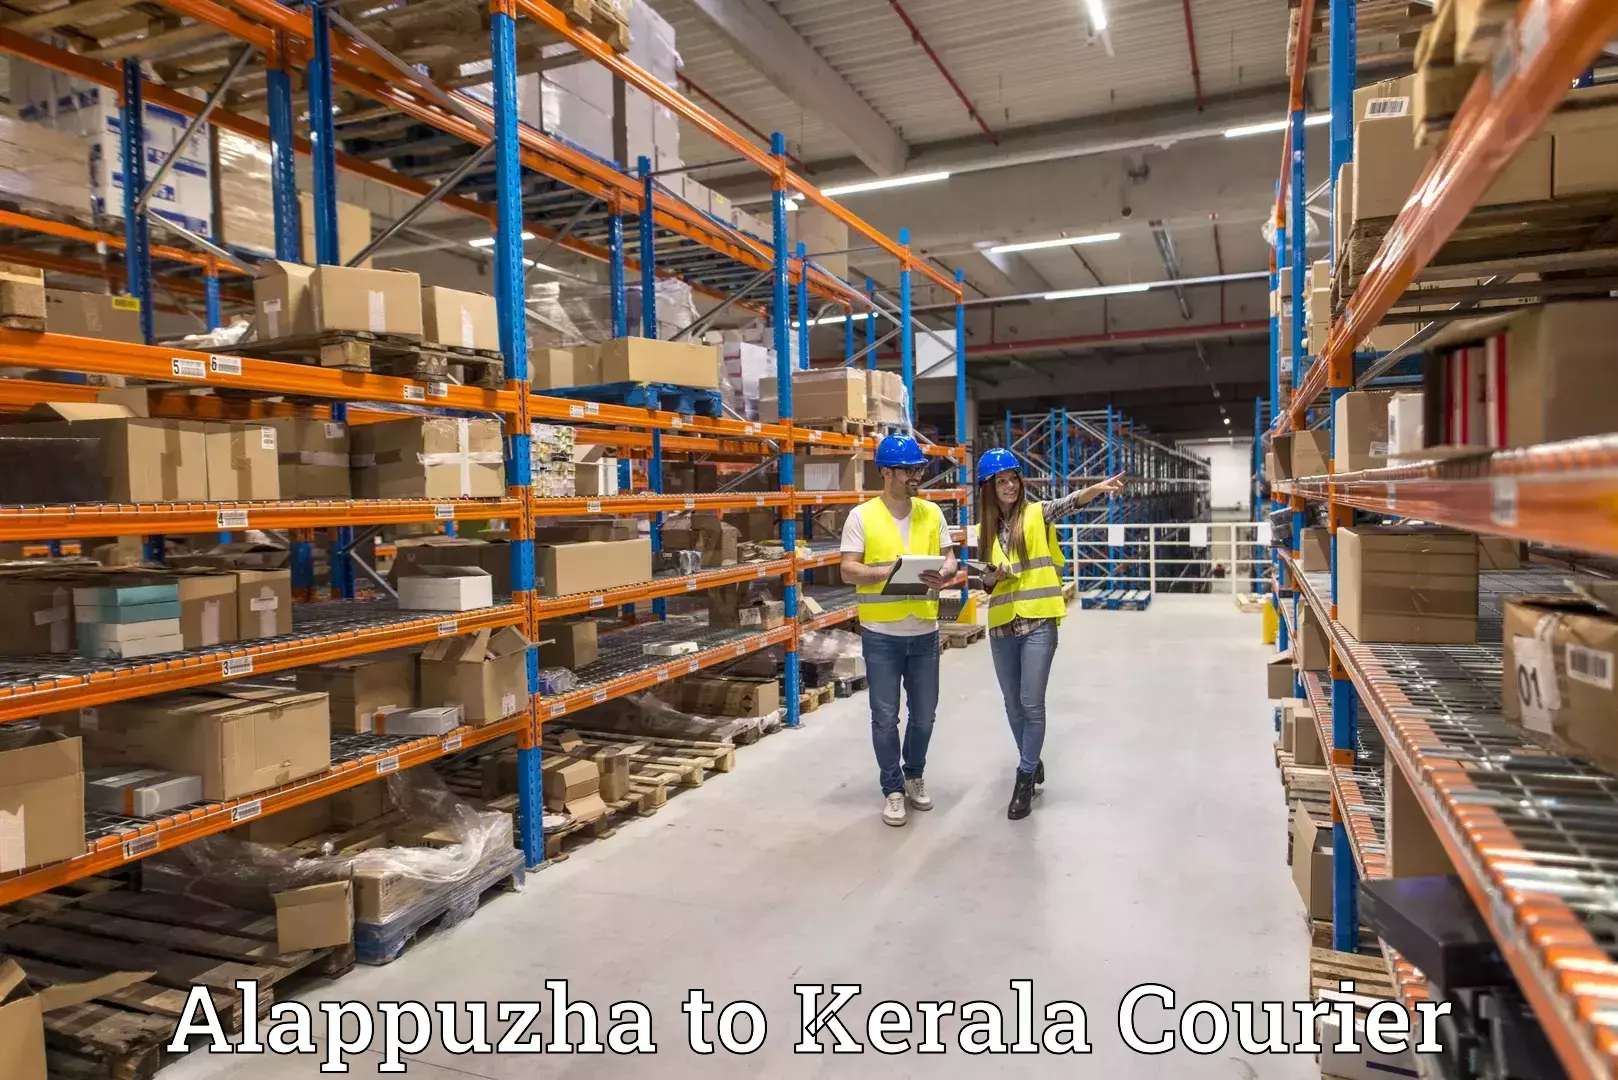 State-of-the-art courier technology Alappuzha to Guruvayur